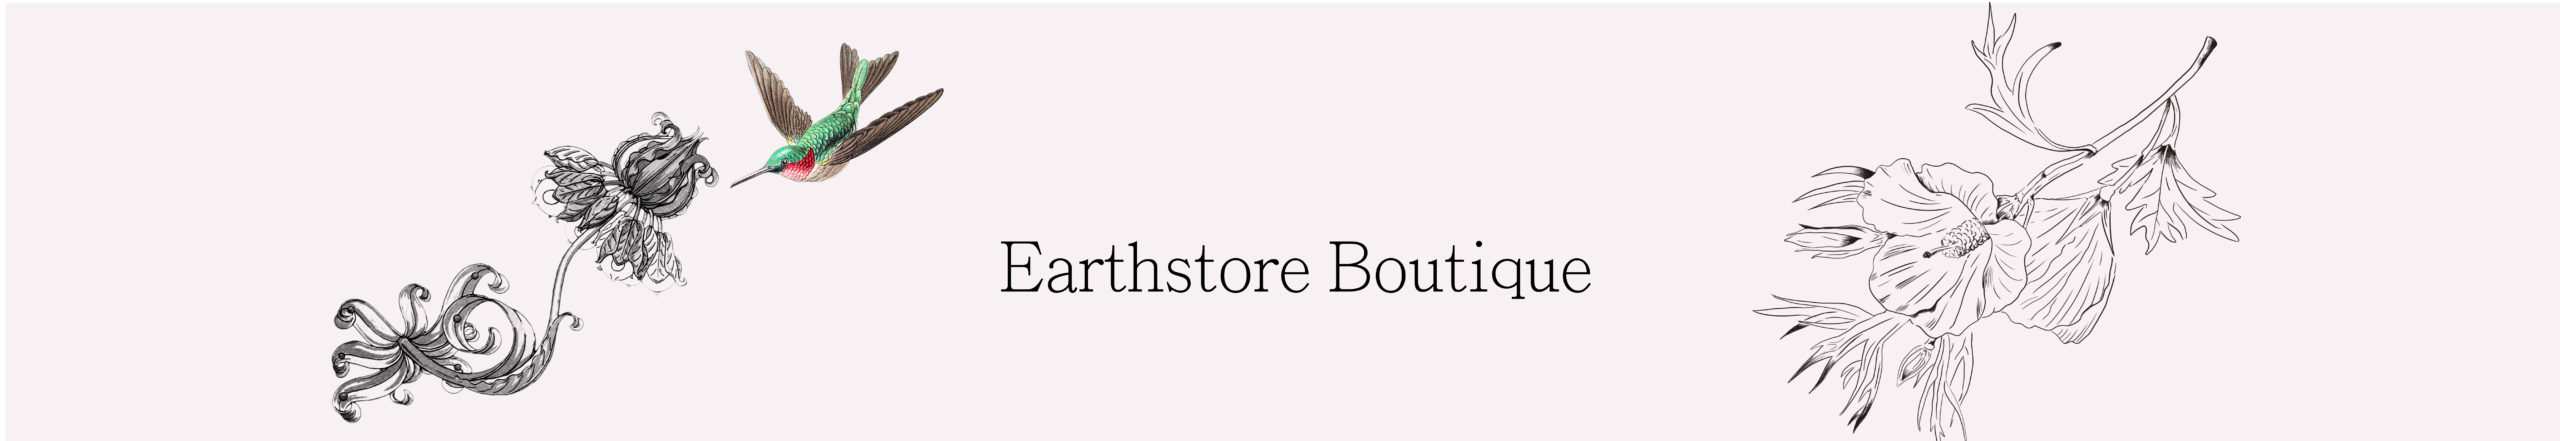 Earthstore Boutique UK